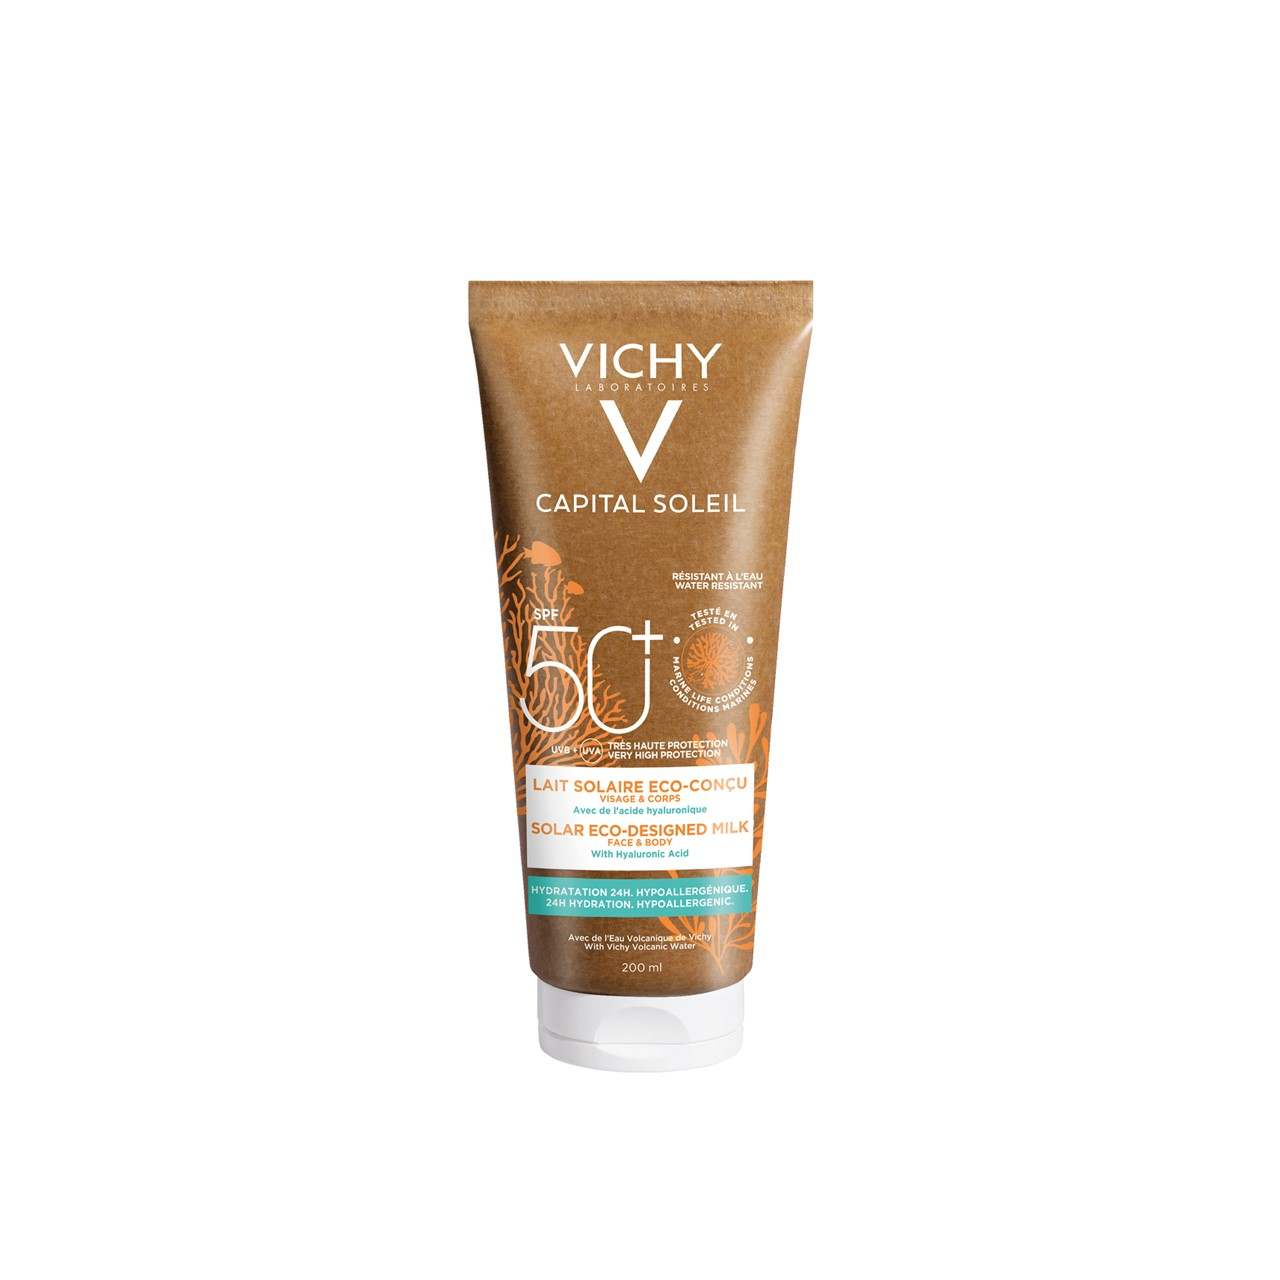 Capital soleil 50 мл vichy. Vichy Capital Soleil солнцезащитный флюид UV-age Daily spf50+. Babe transparent sunsccreen wet Skin SPF 50+ 200ml. Vichy Sunscreen spf50 Capital Soleil velvety Cream.